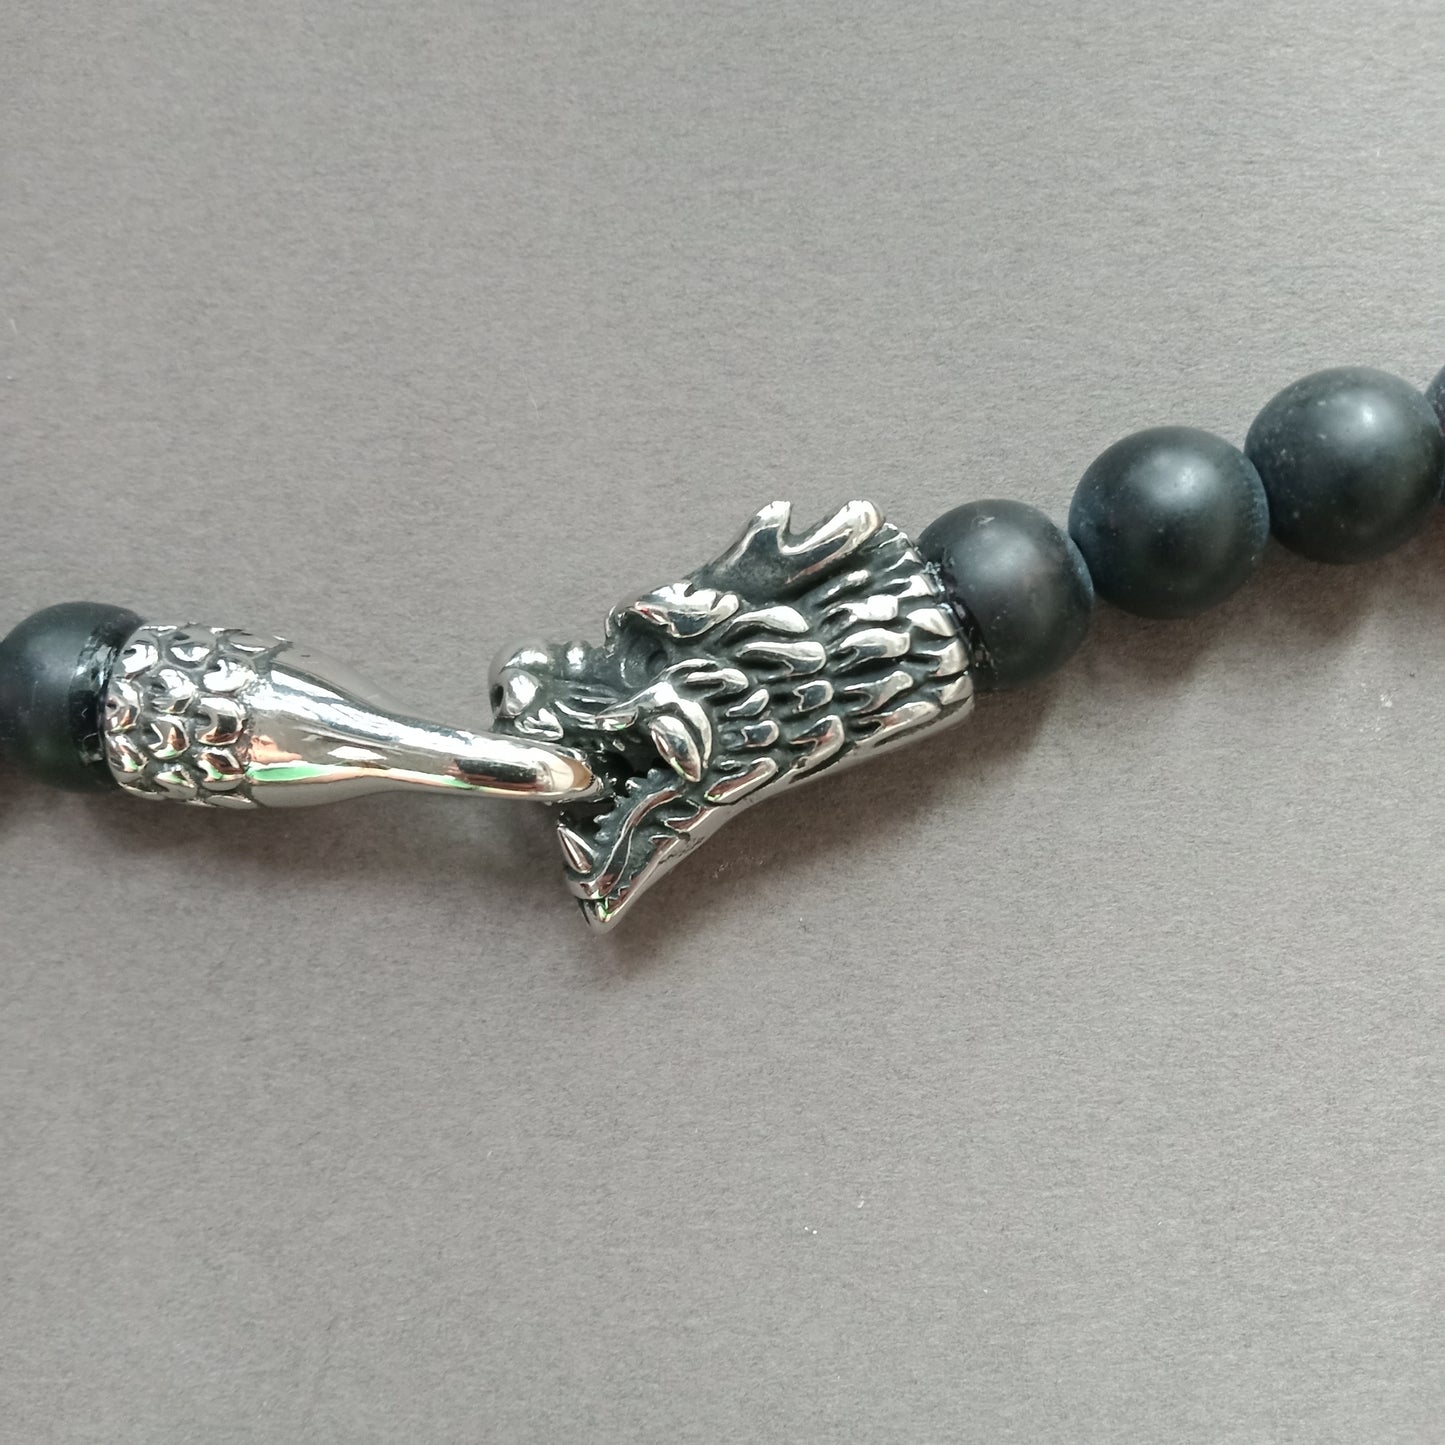 Rising dragon necklace